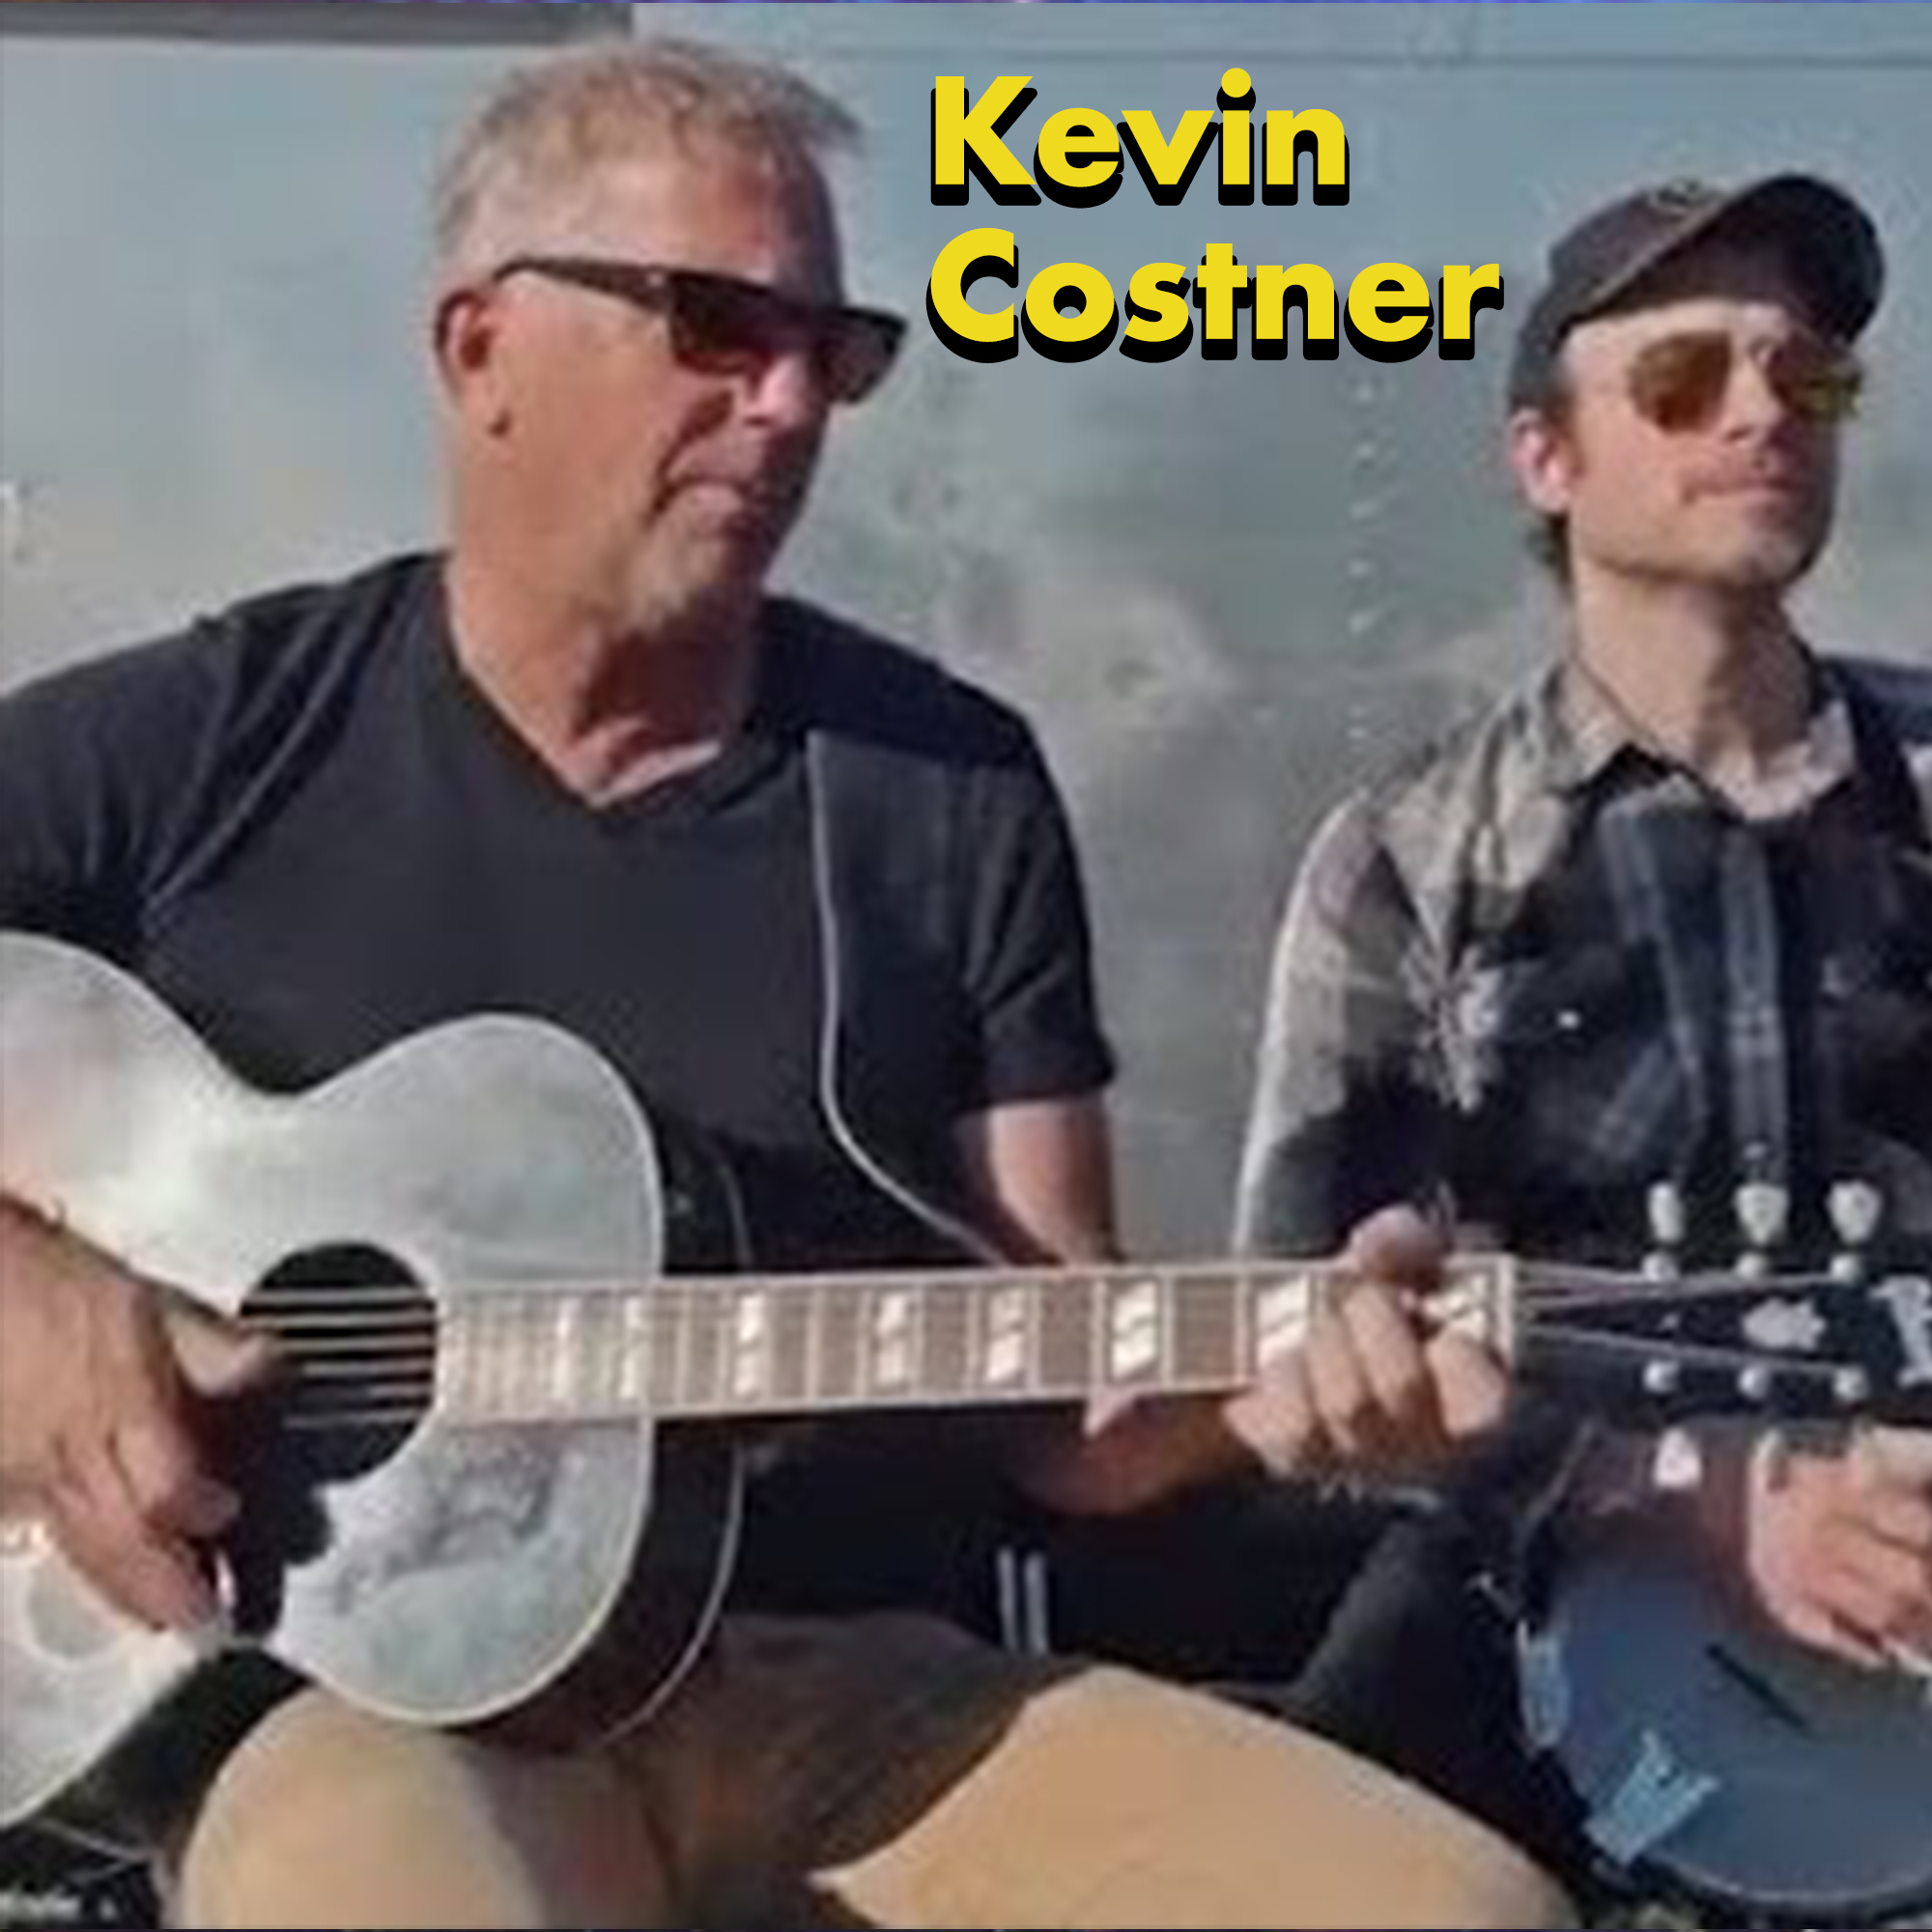 actors in bands - acoustic guitar - Kevin Costner